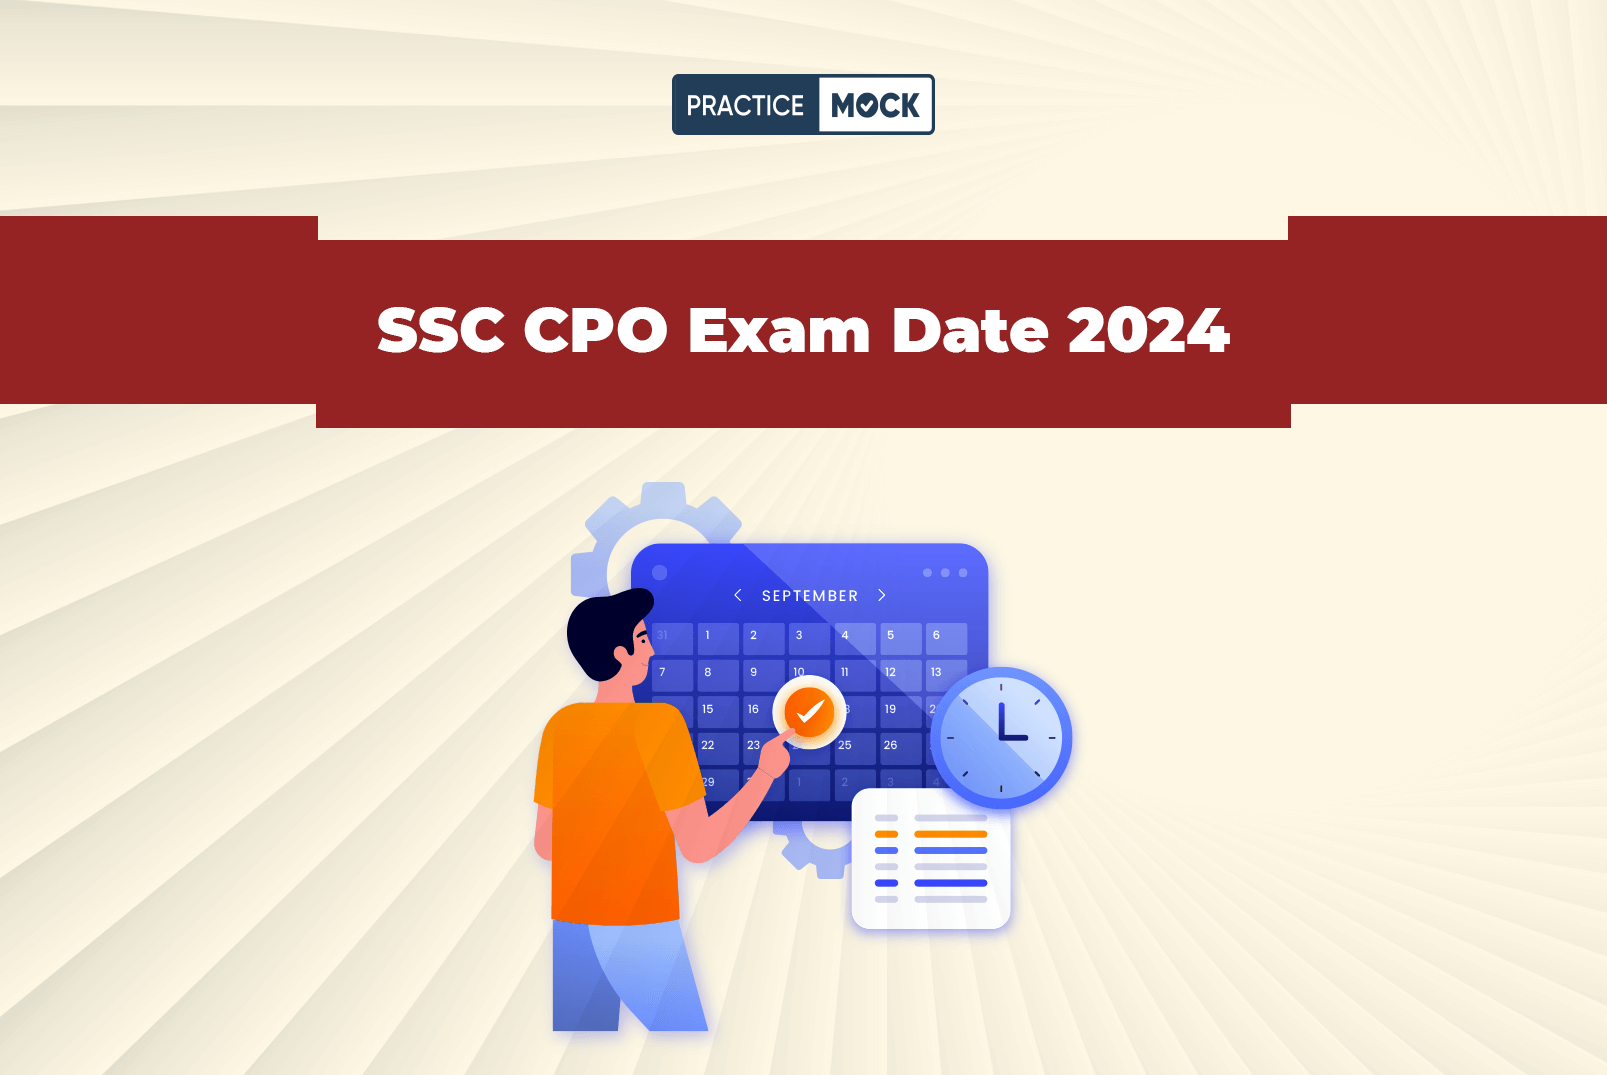 SSC CPO Exam Date 2024